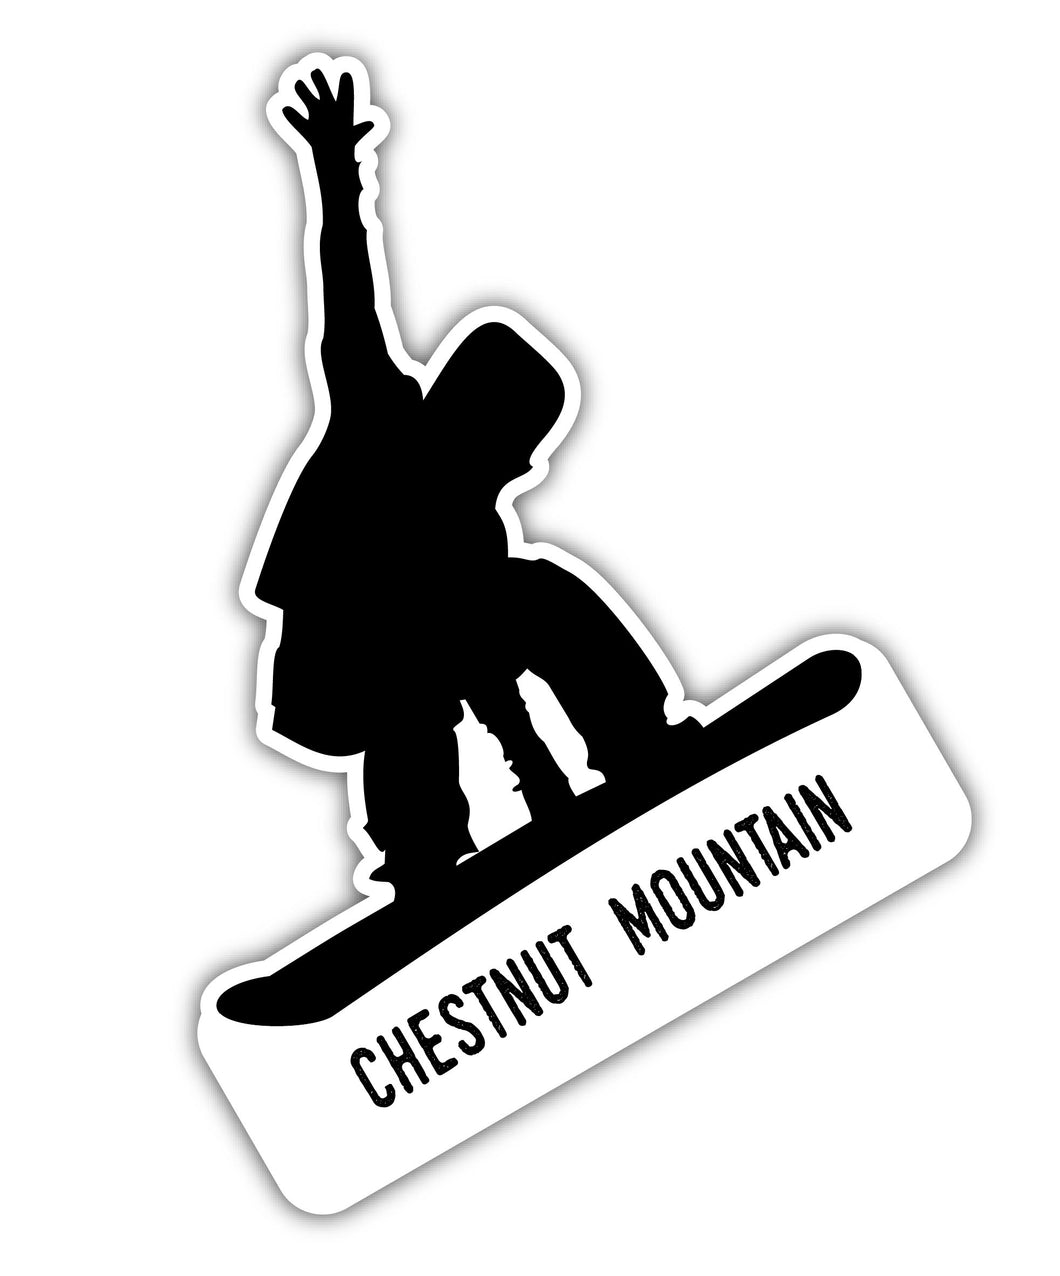 Chestnut Mountain Illinois Ski Adventures Souvenir Approximately 5 x 2.5-Inch Vinyl Decal Sticker Goggle Design